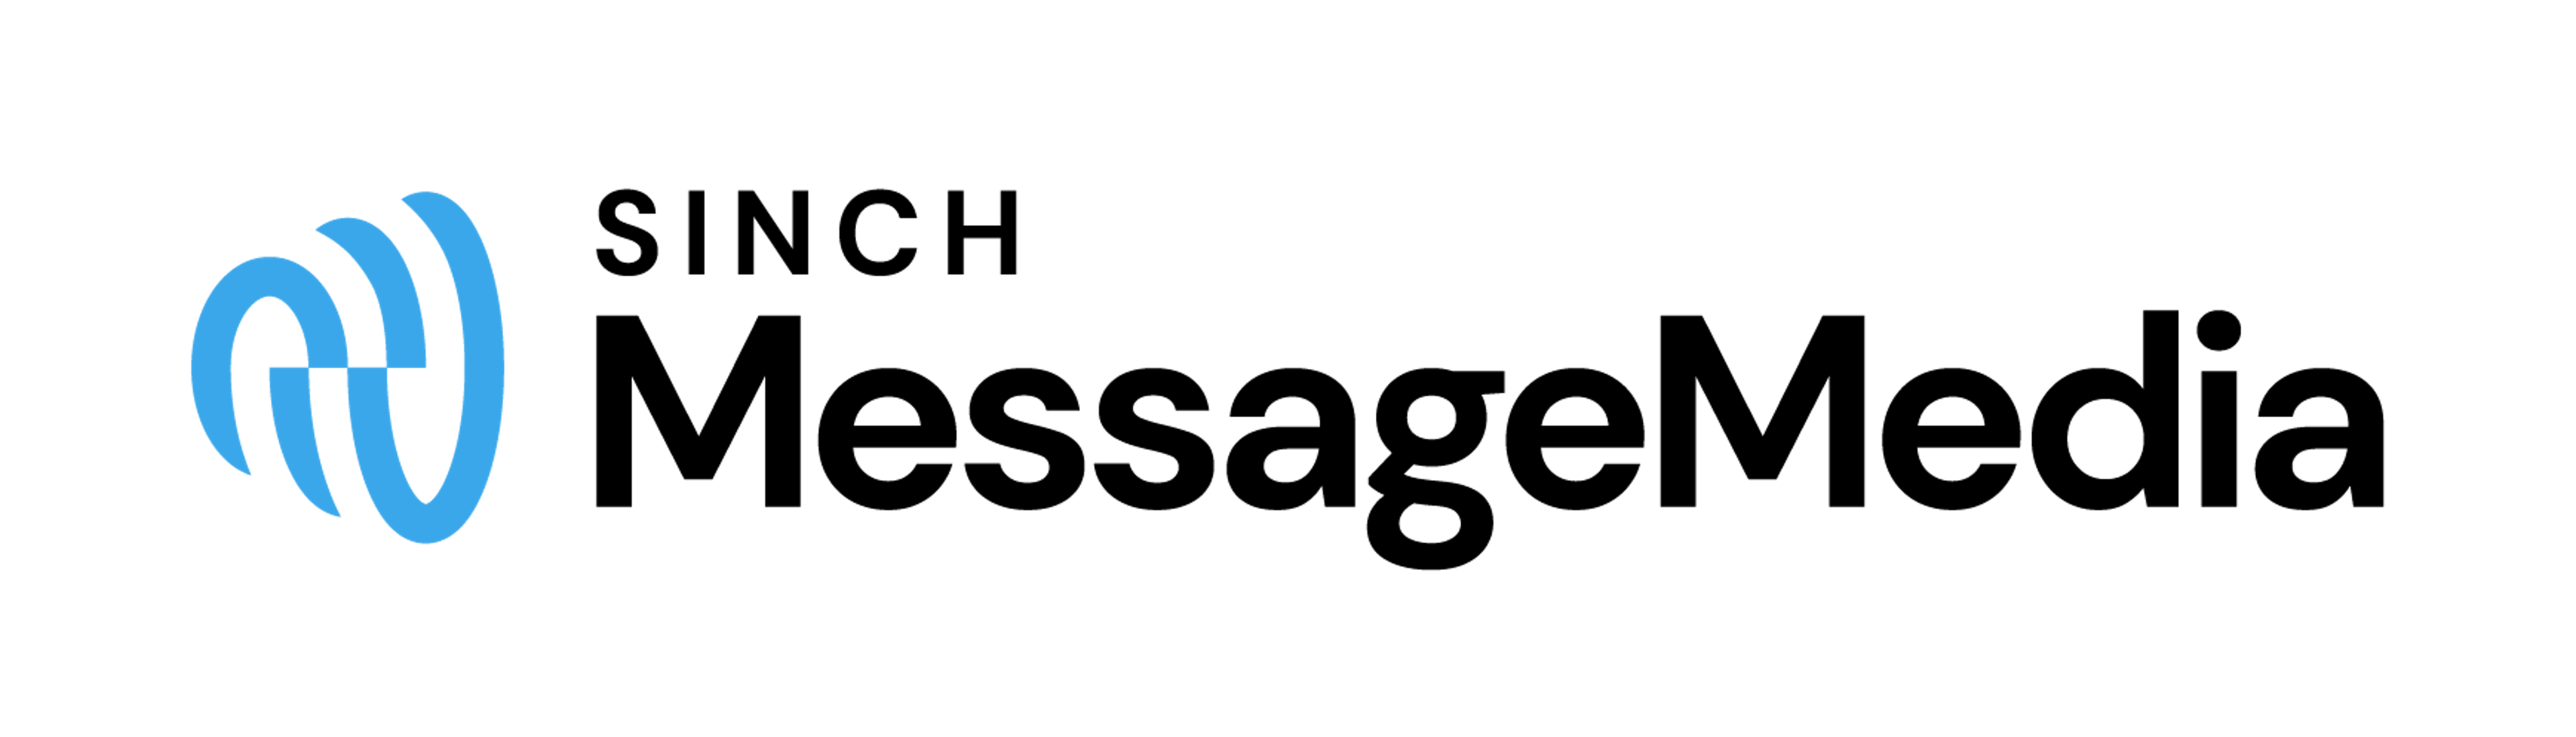 Sinch MessageMedia Logo